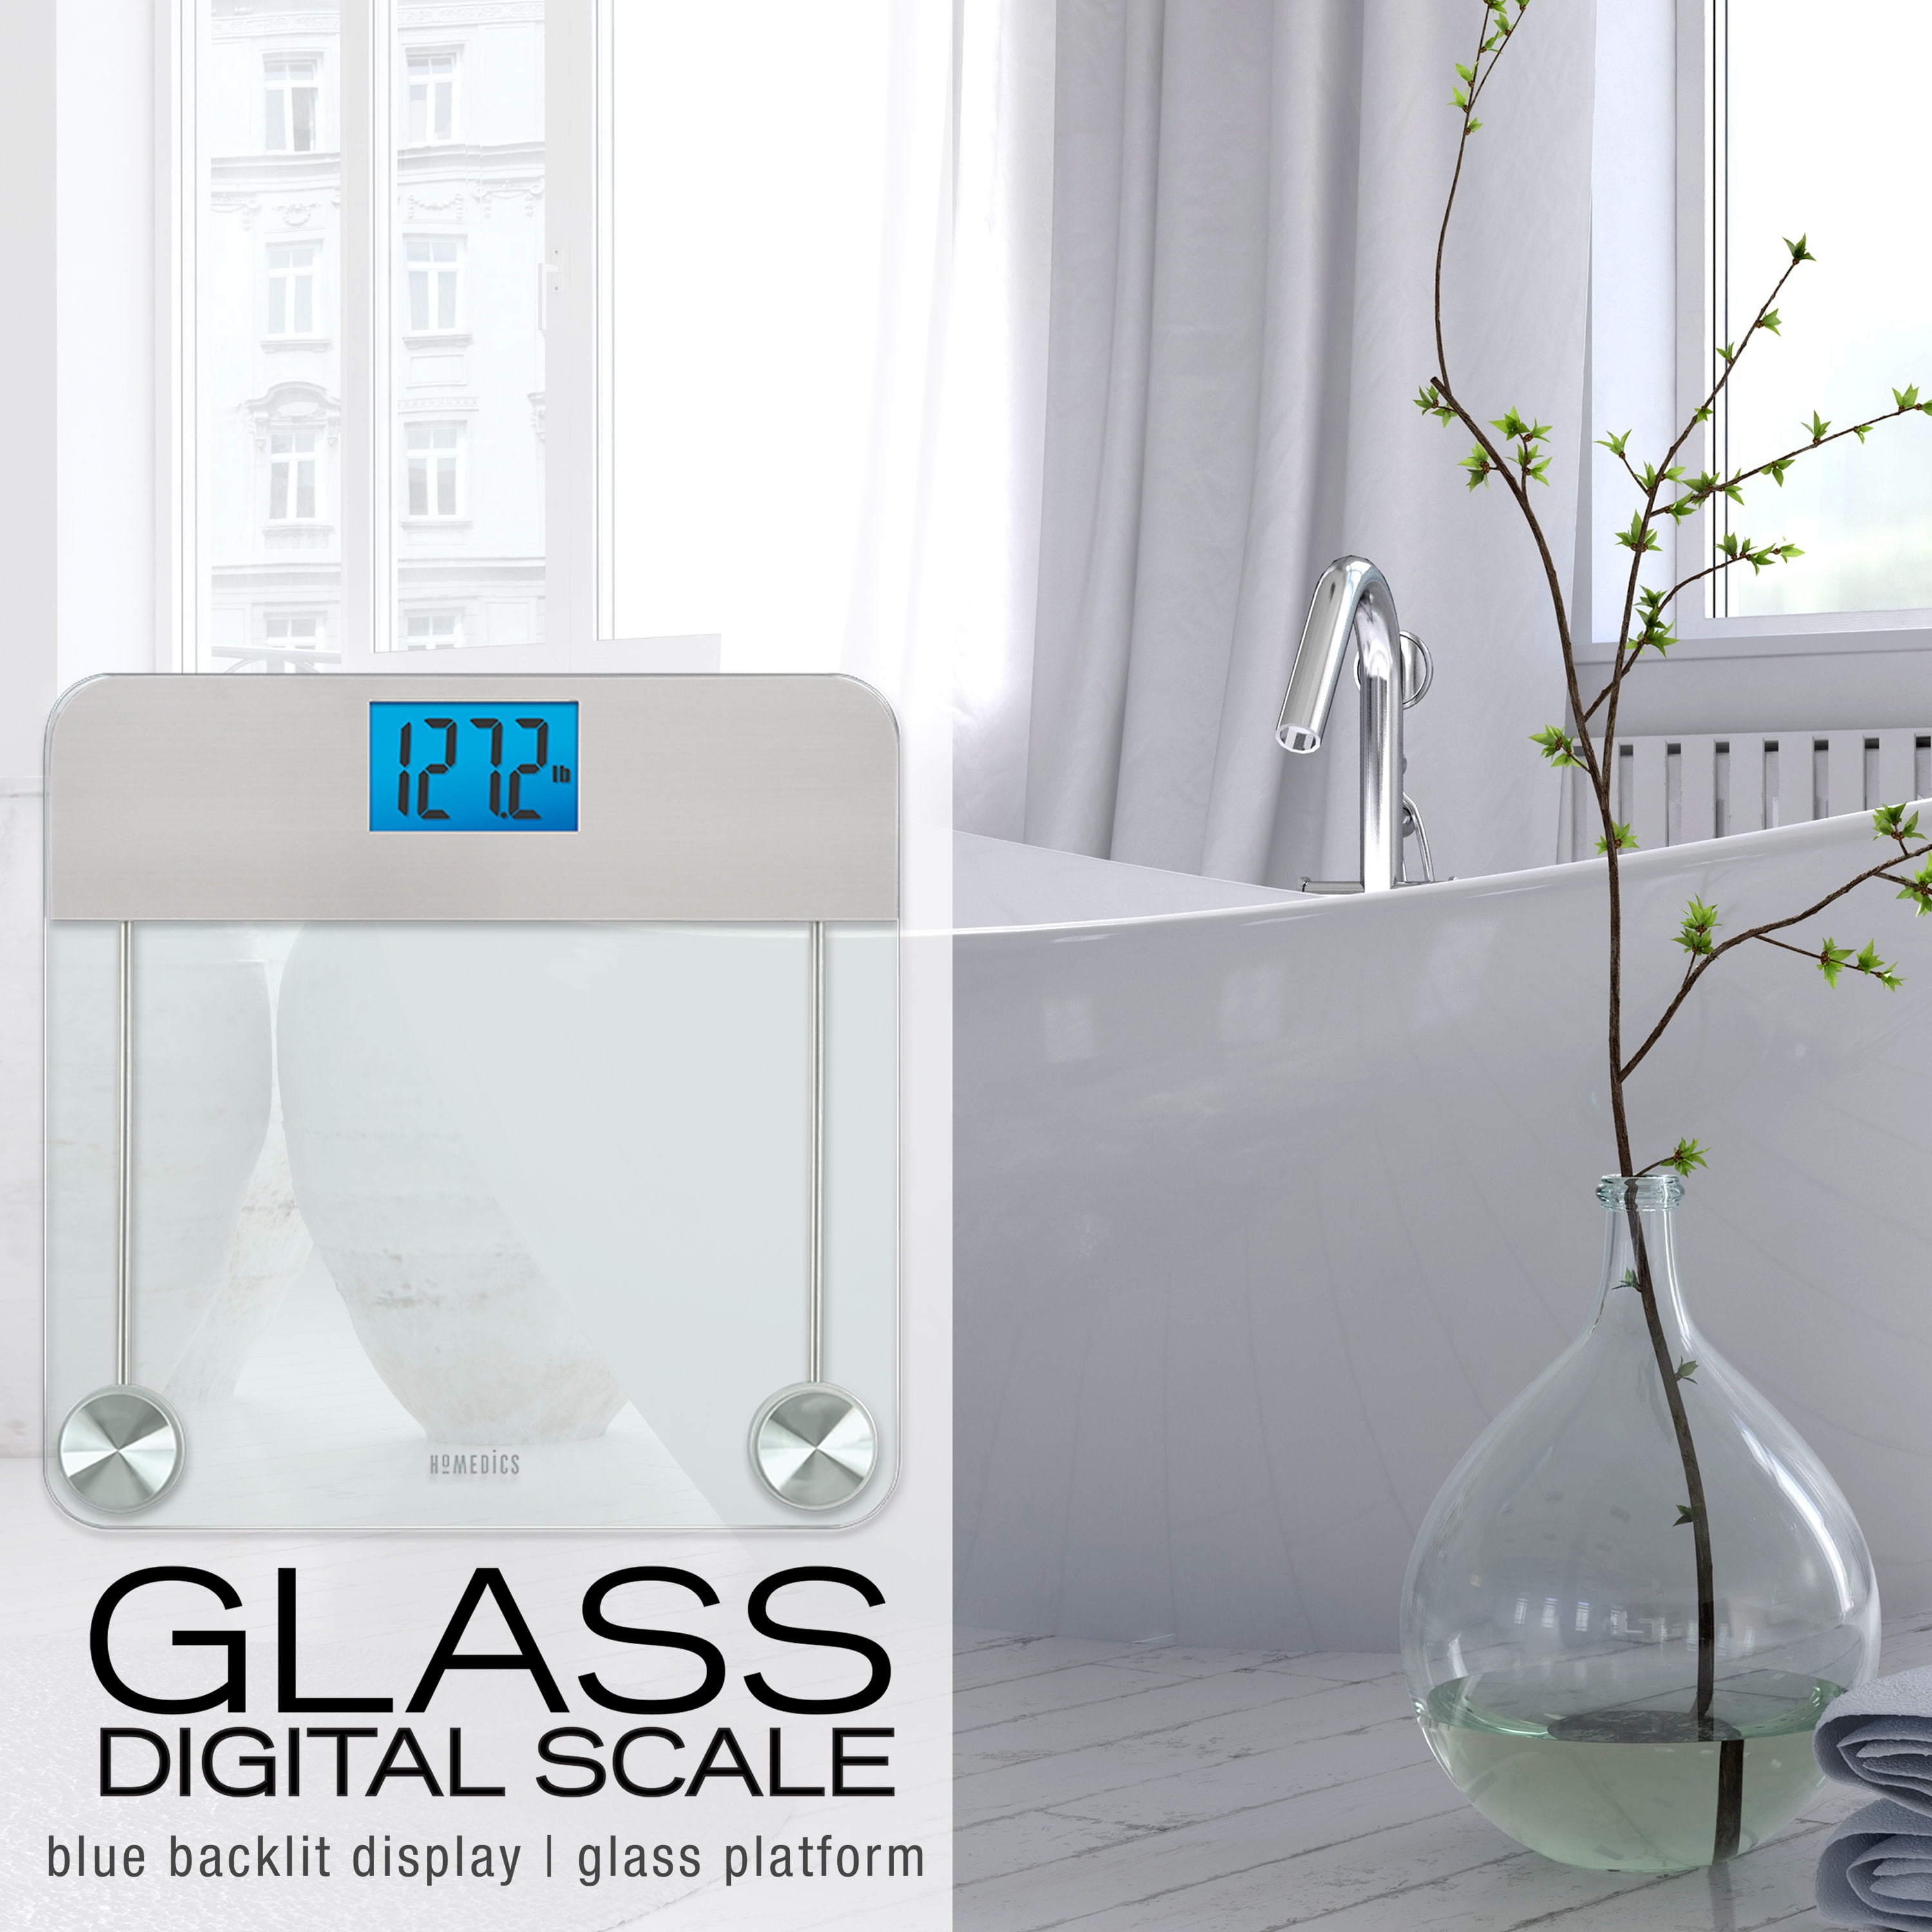 Help! LCD Repair - Repairing a Homedics Digital Bathroom Scale